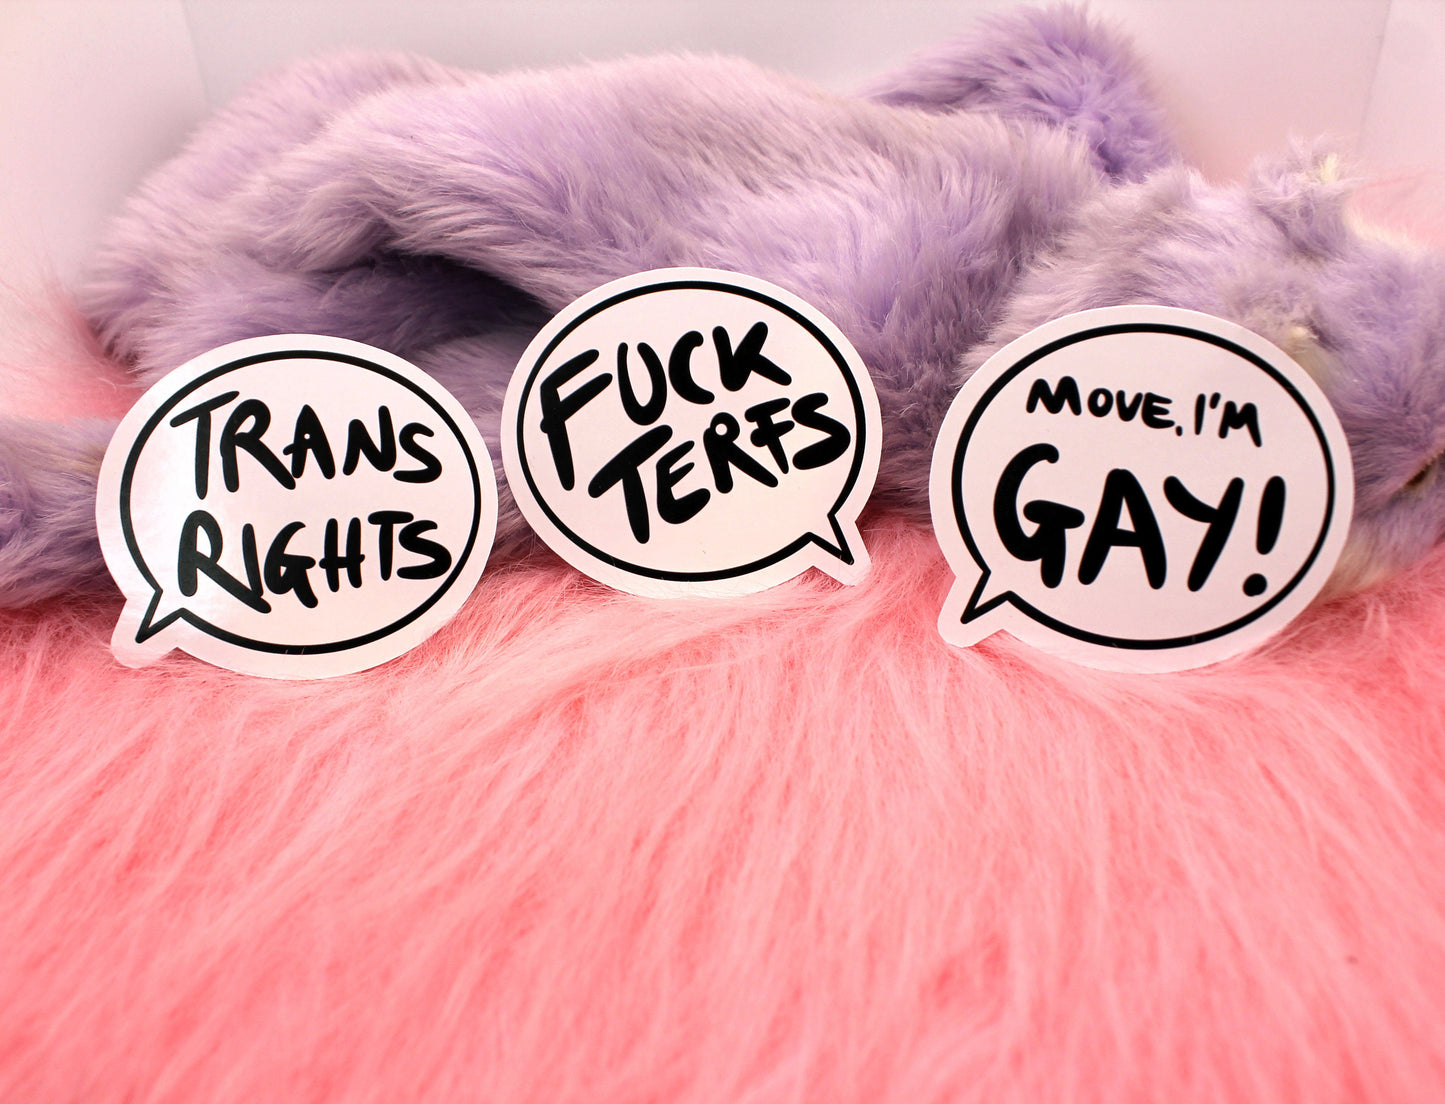 Trans Rights Speech Bubble Sticker (60mm) - Trans Rights Matter